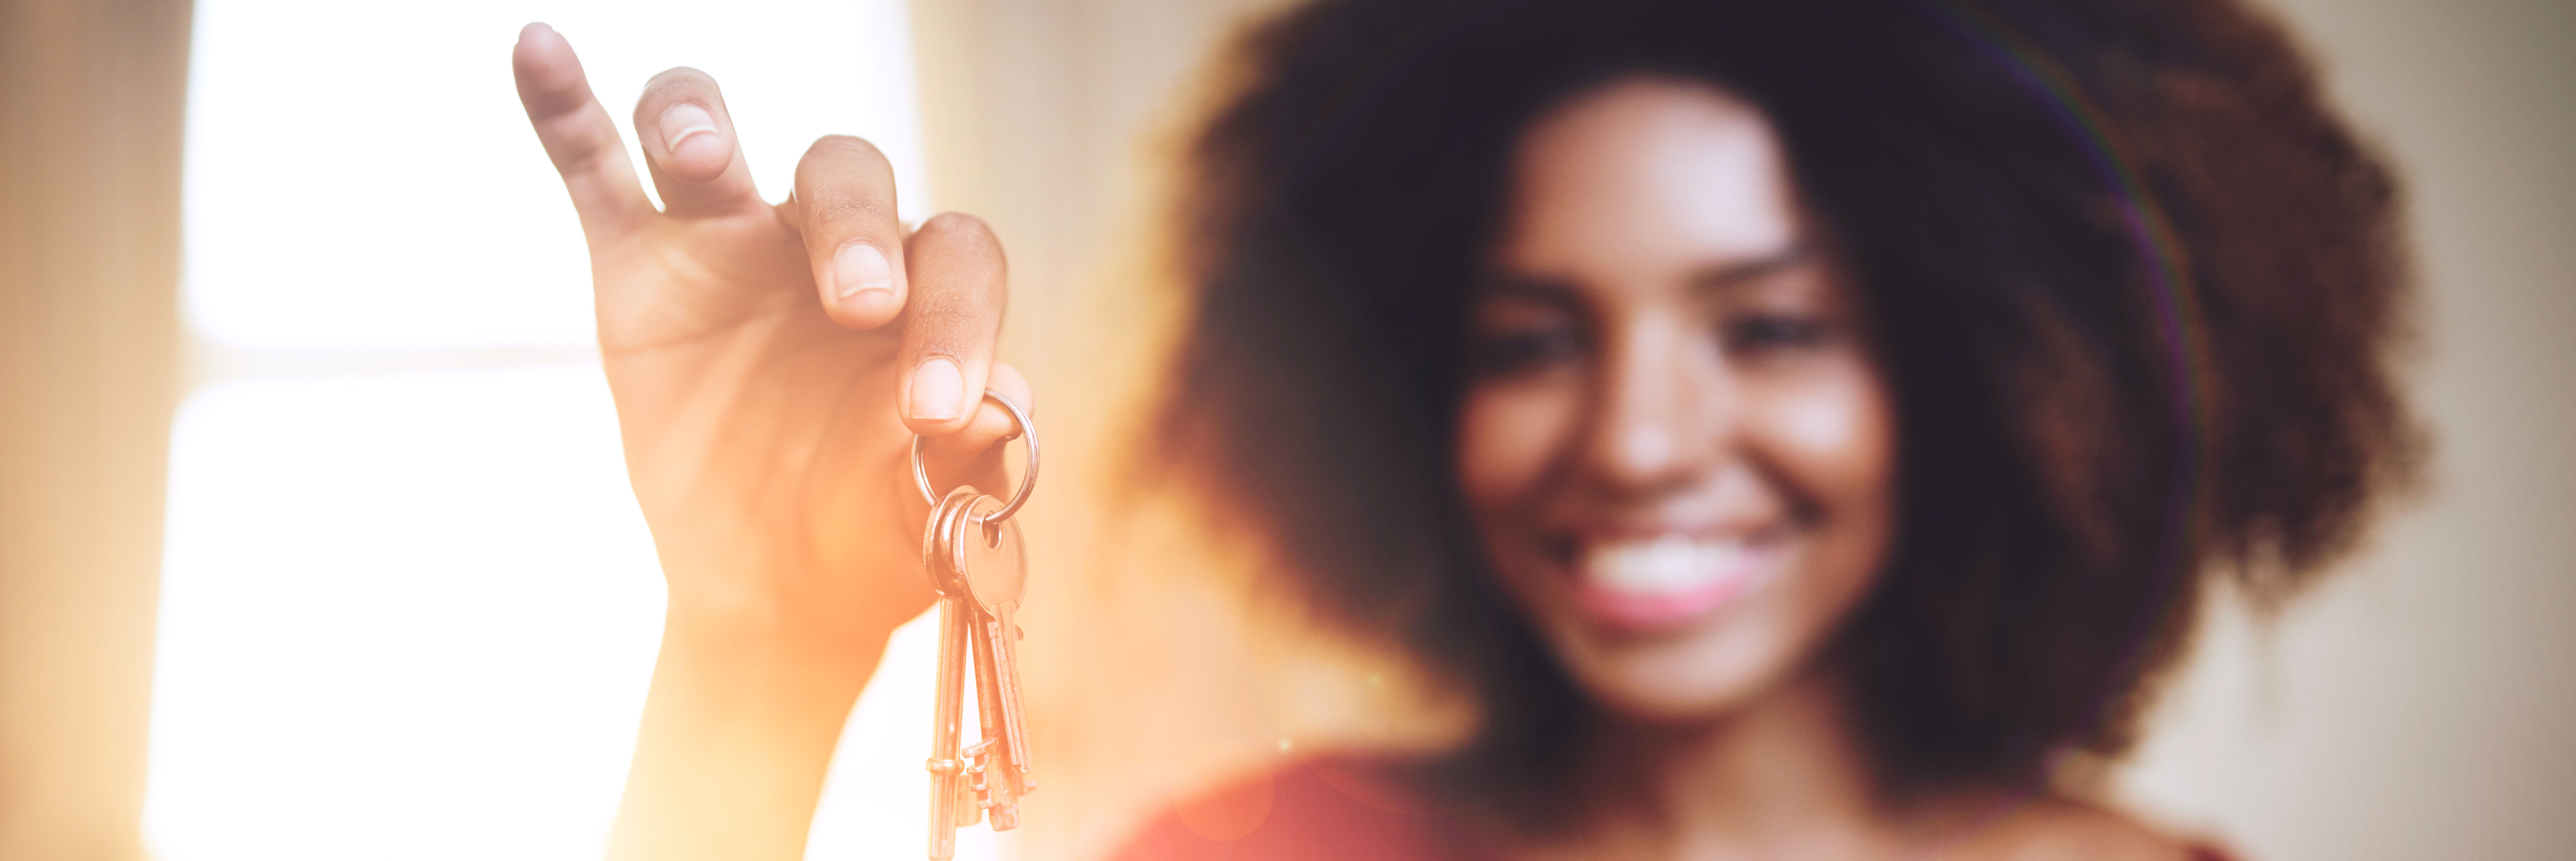 Smiling woman holding keys